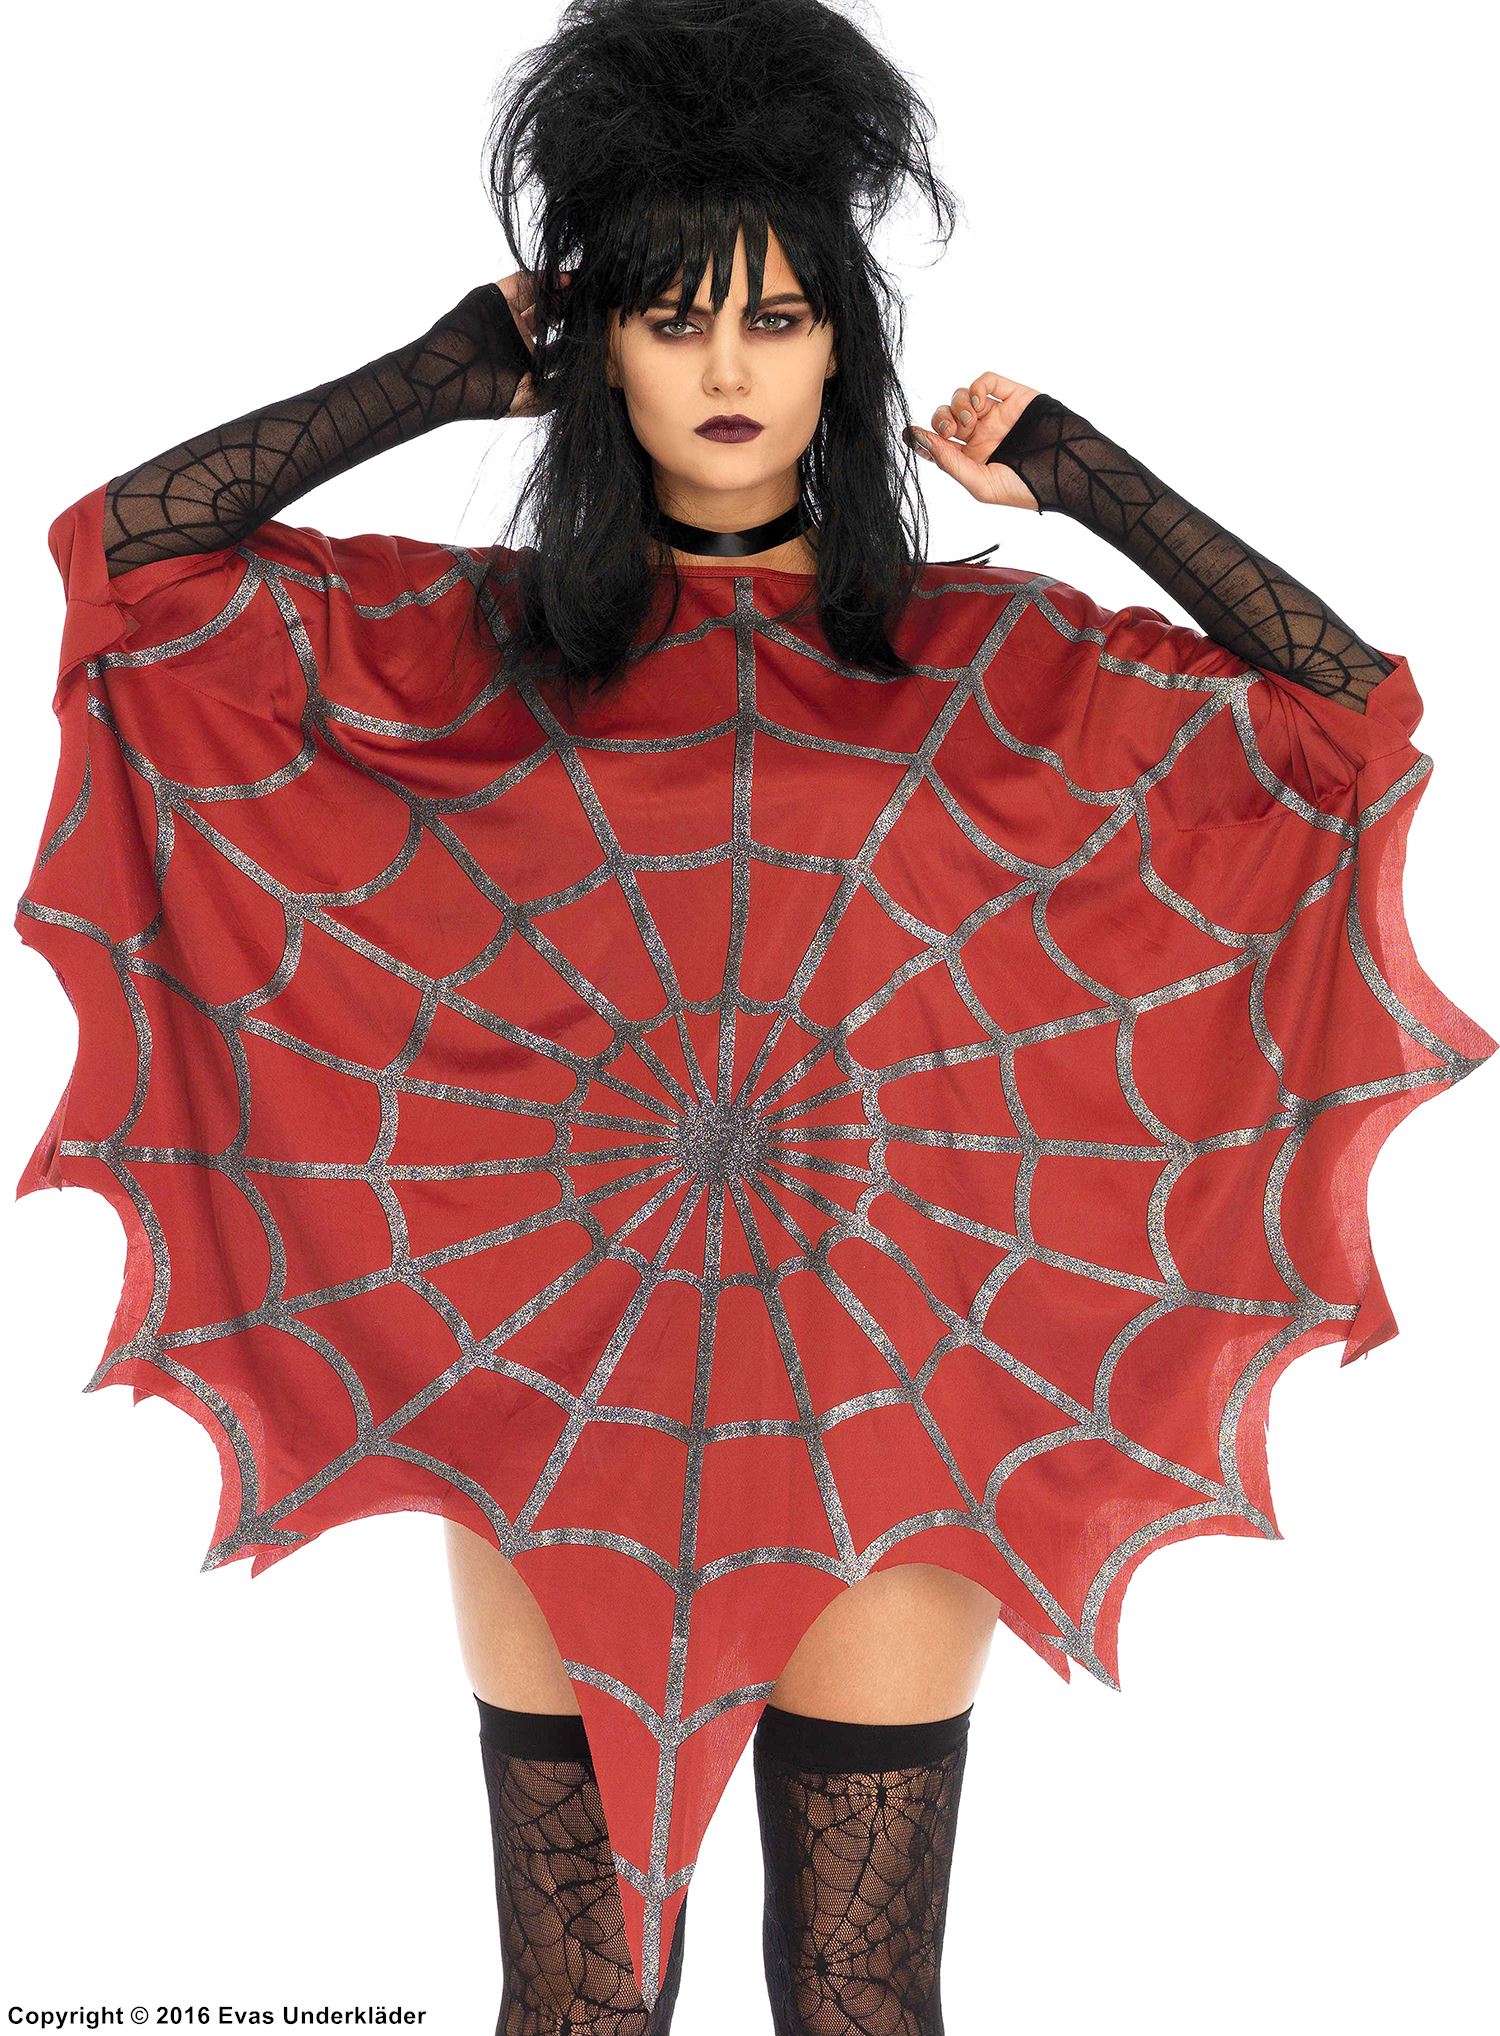 Spider (woman), costume top, glitter, spider web